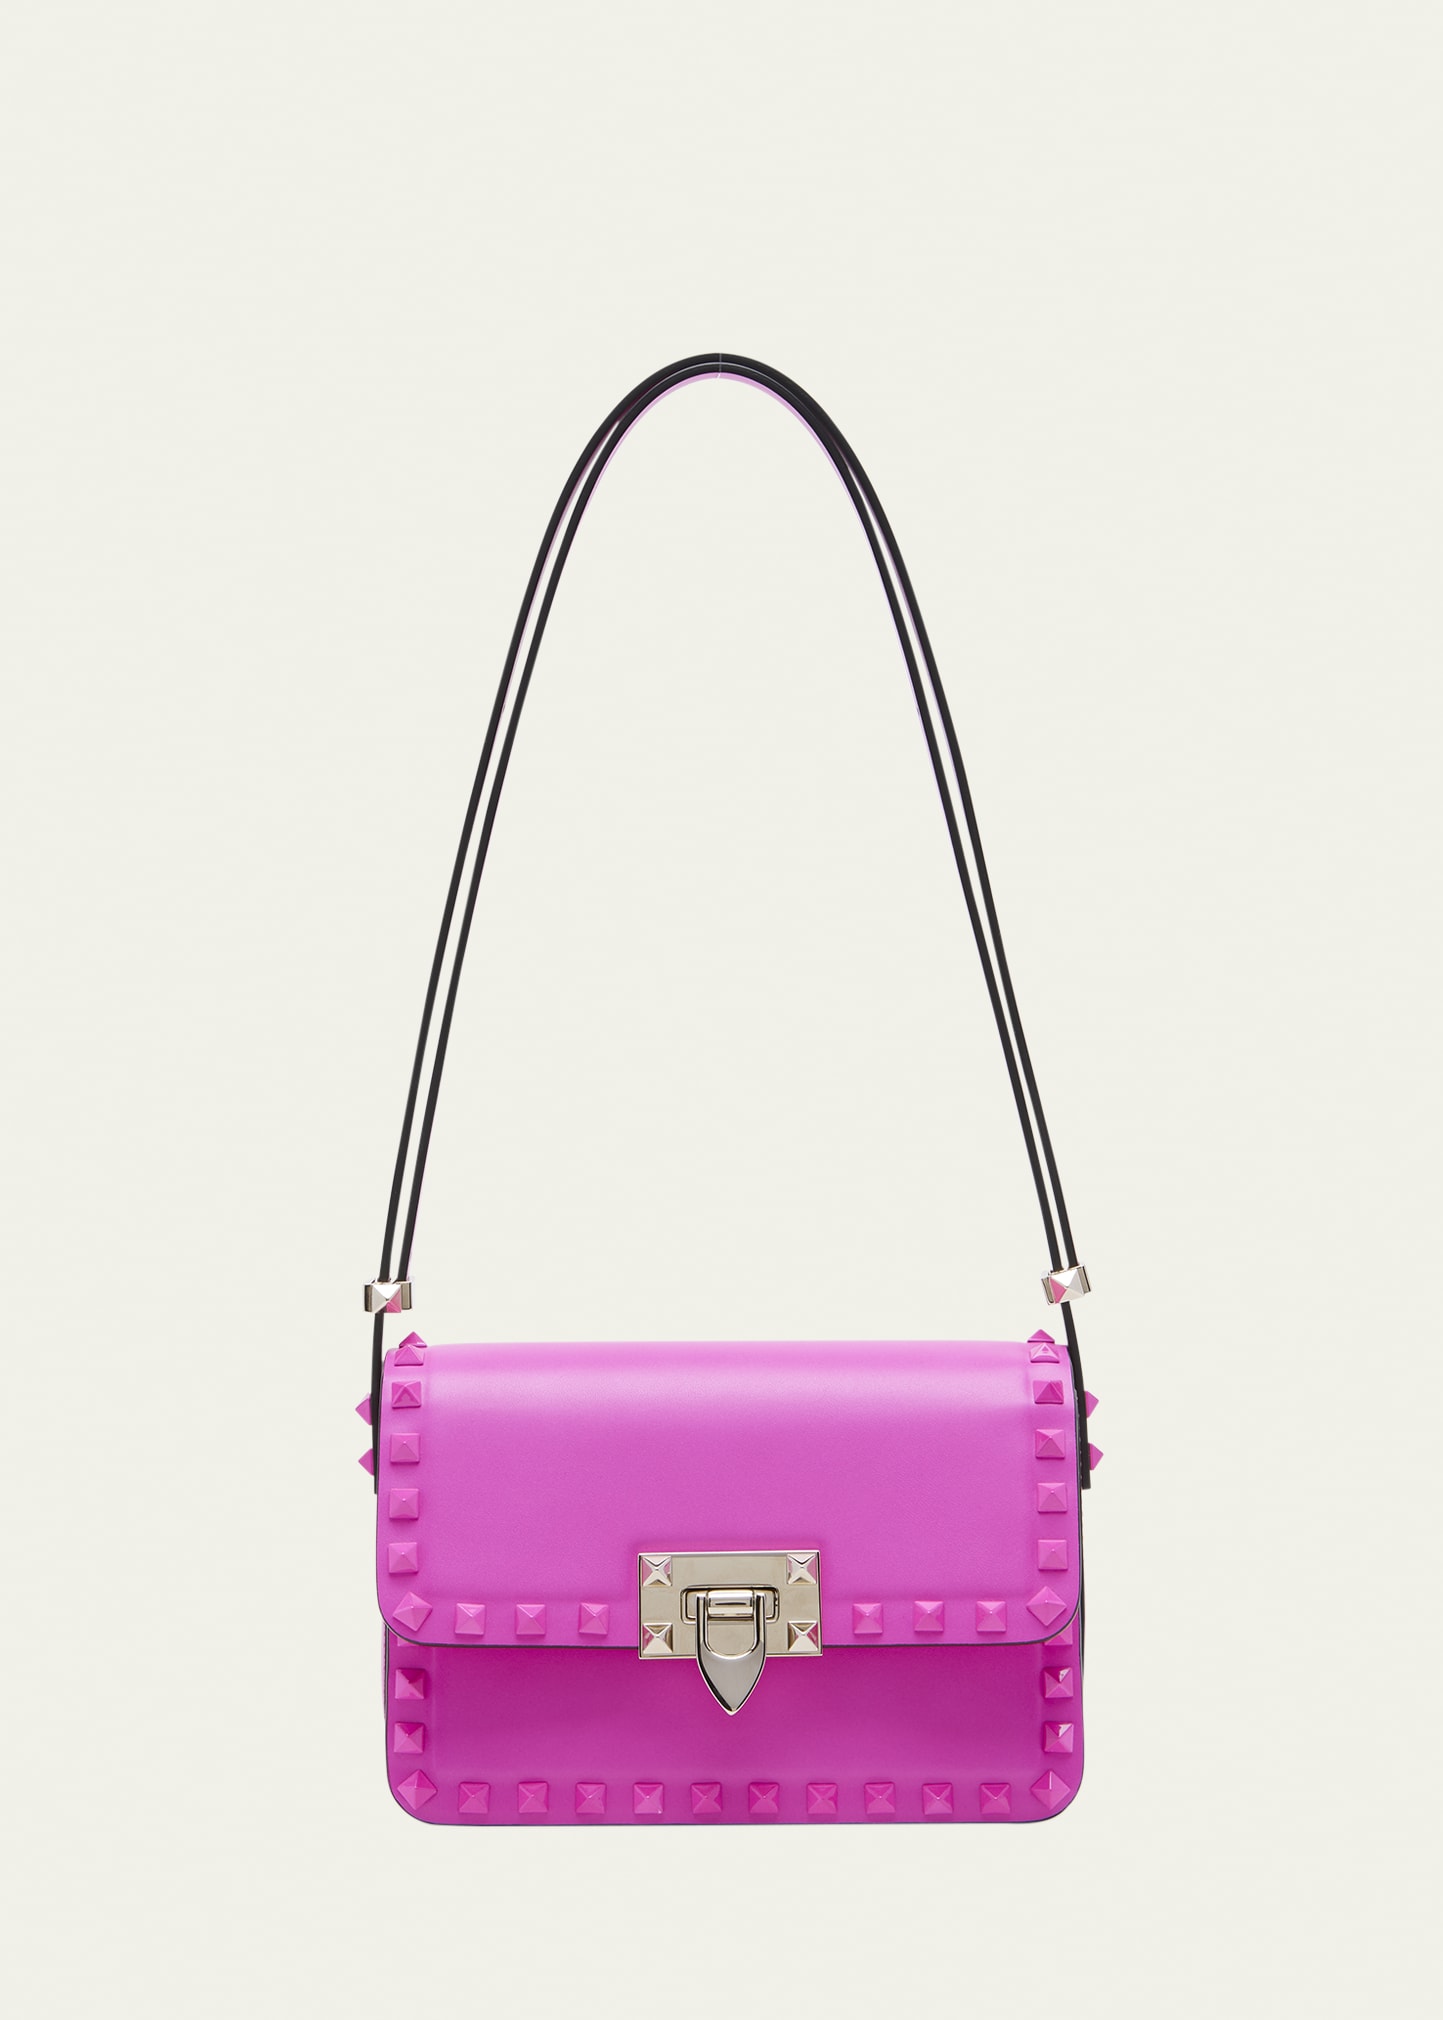 Authentic Valentino Garavani Rockstud Tote Bag In Hot Pink